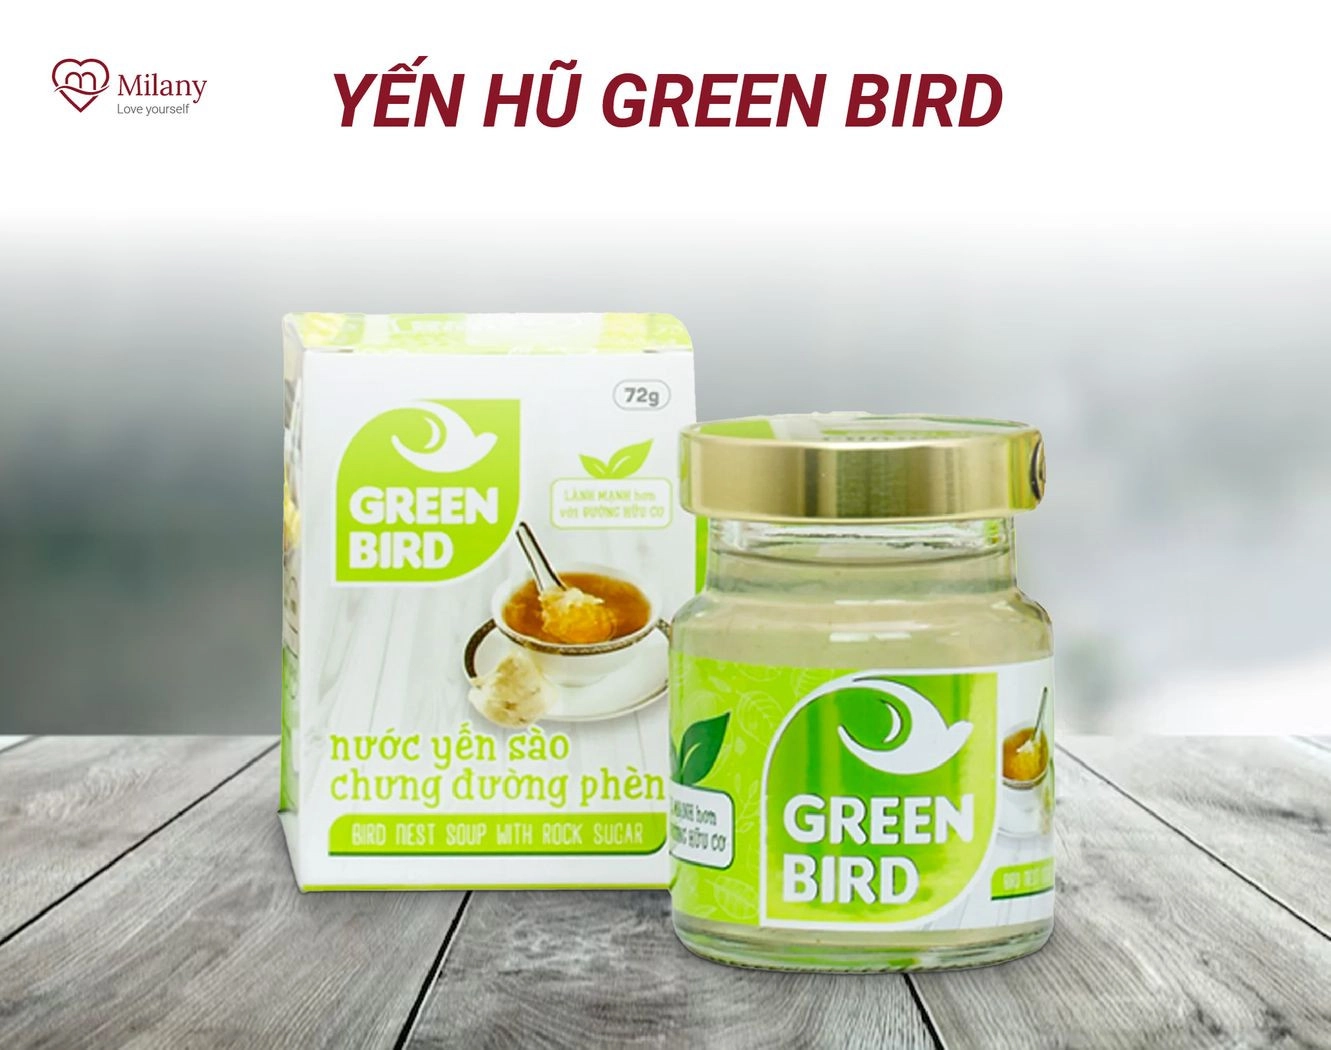 yen-hu-green-bird